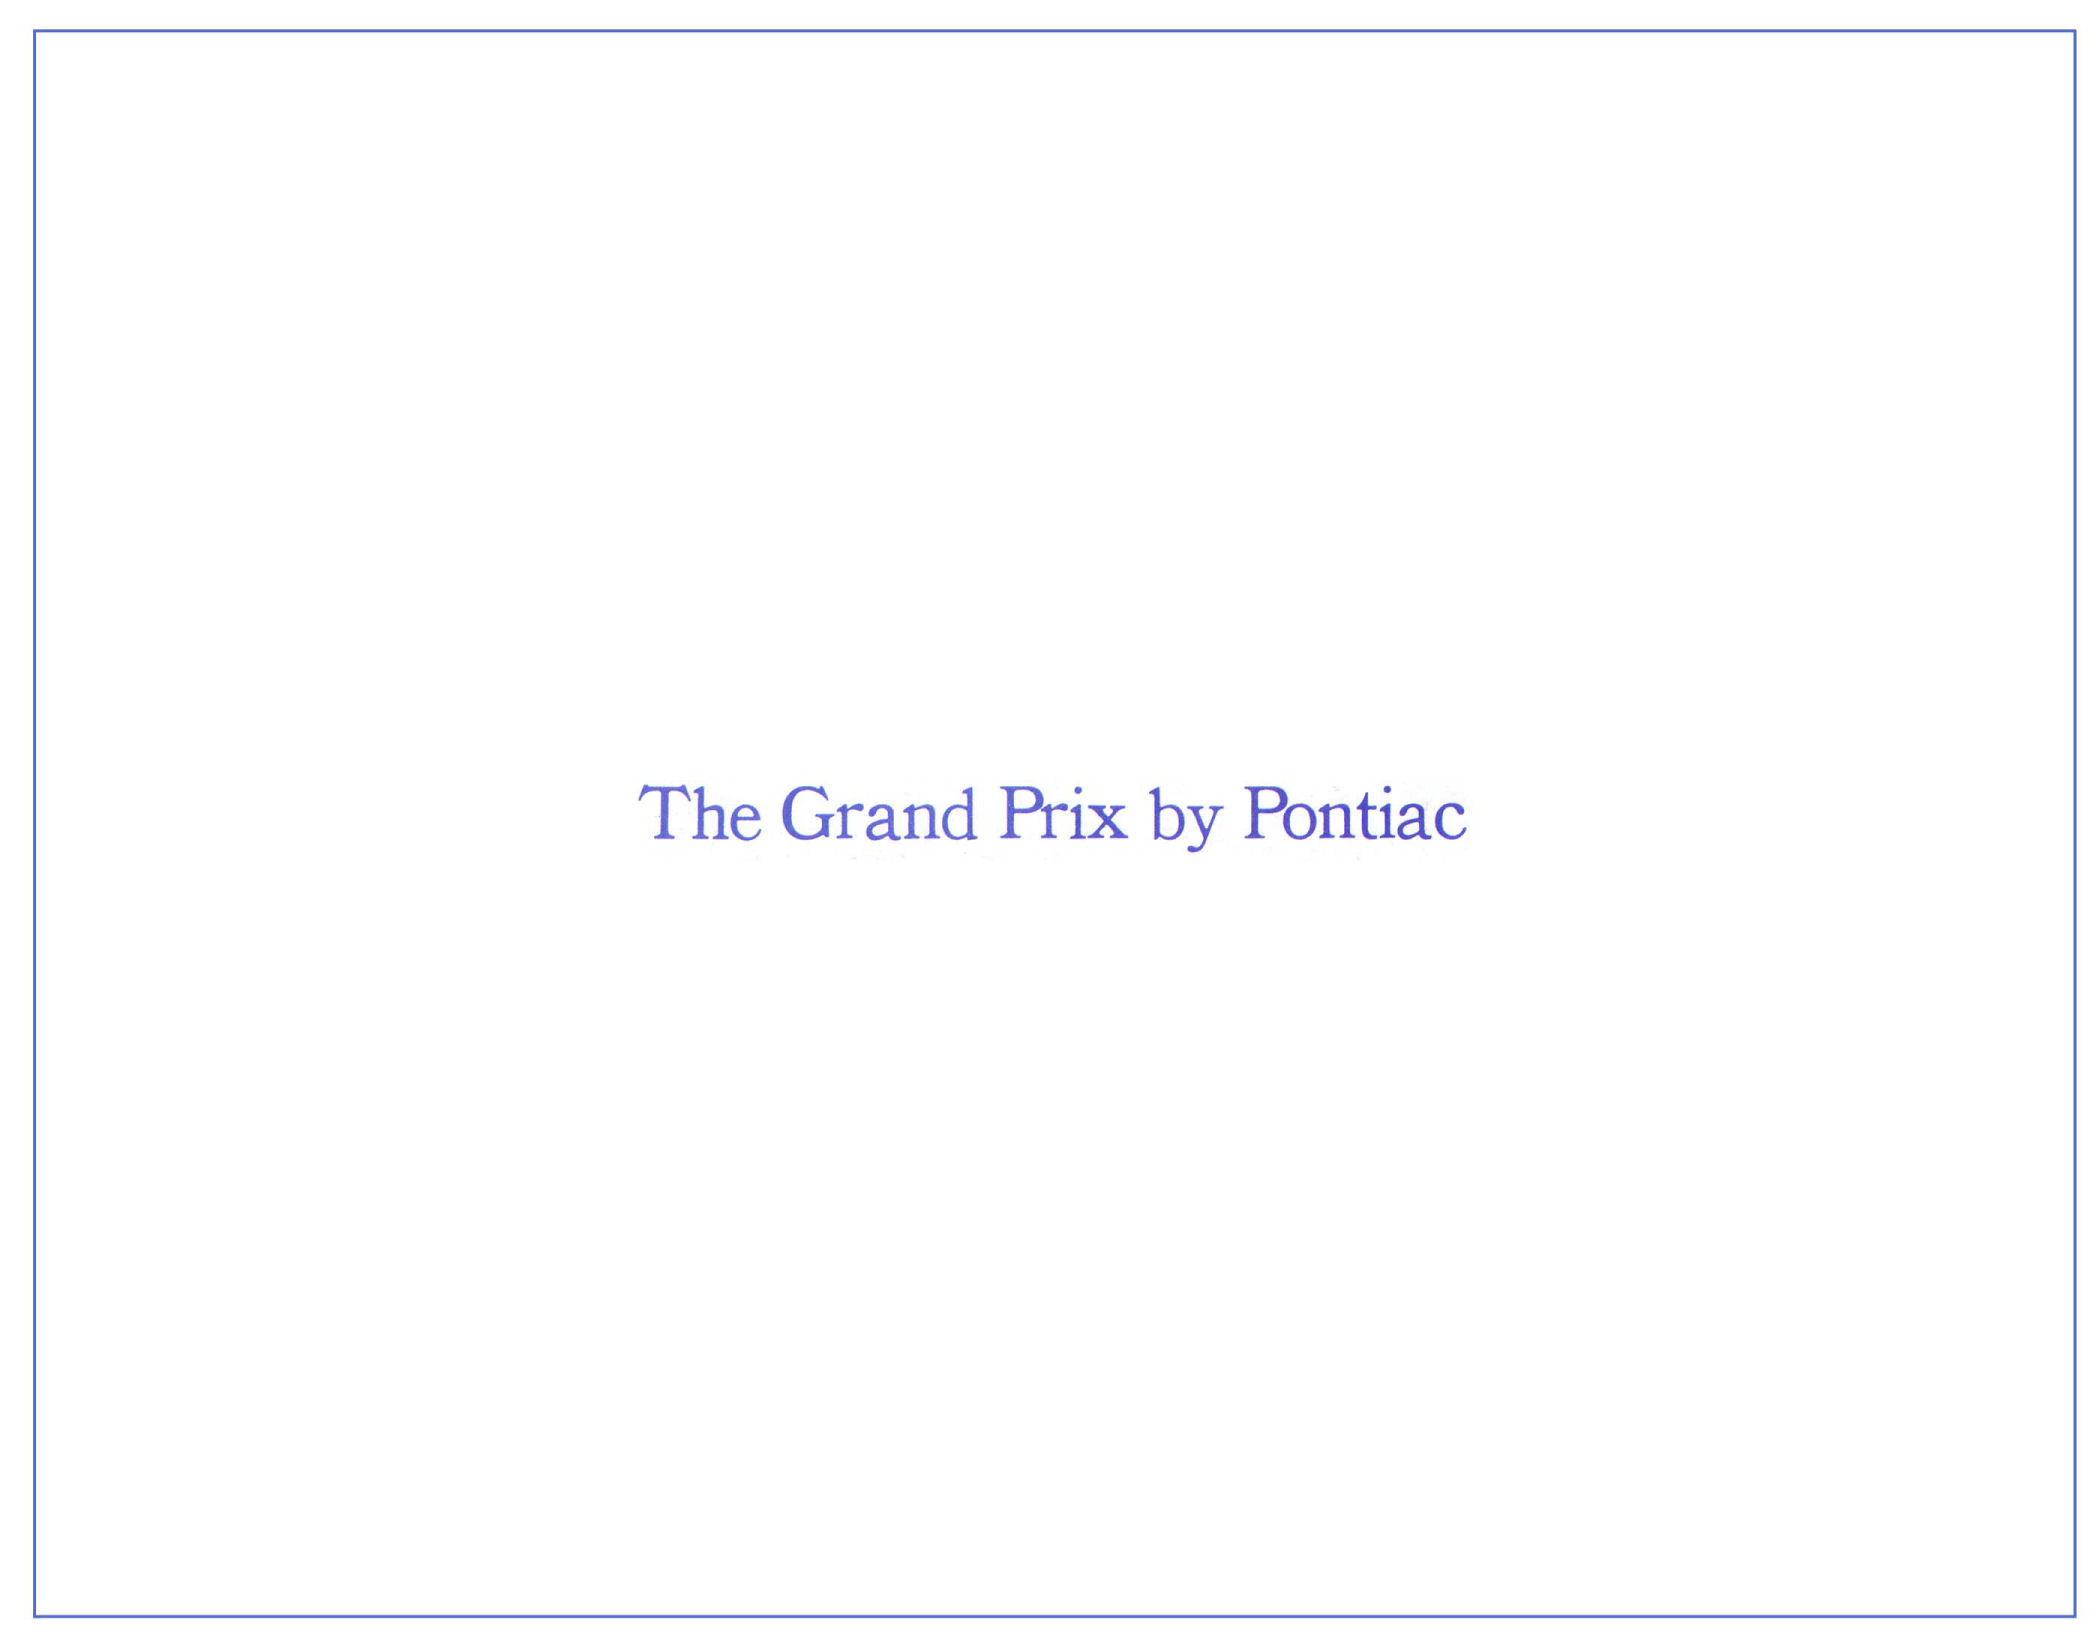 1965_Pontiac_Grand_Prix_Folder-01